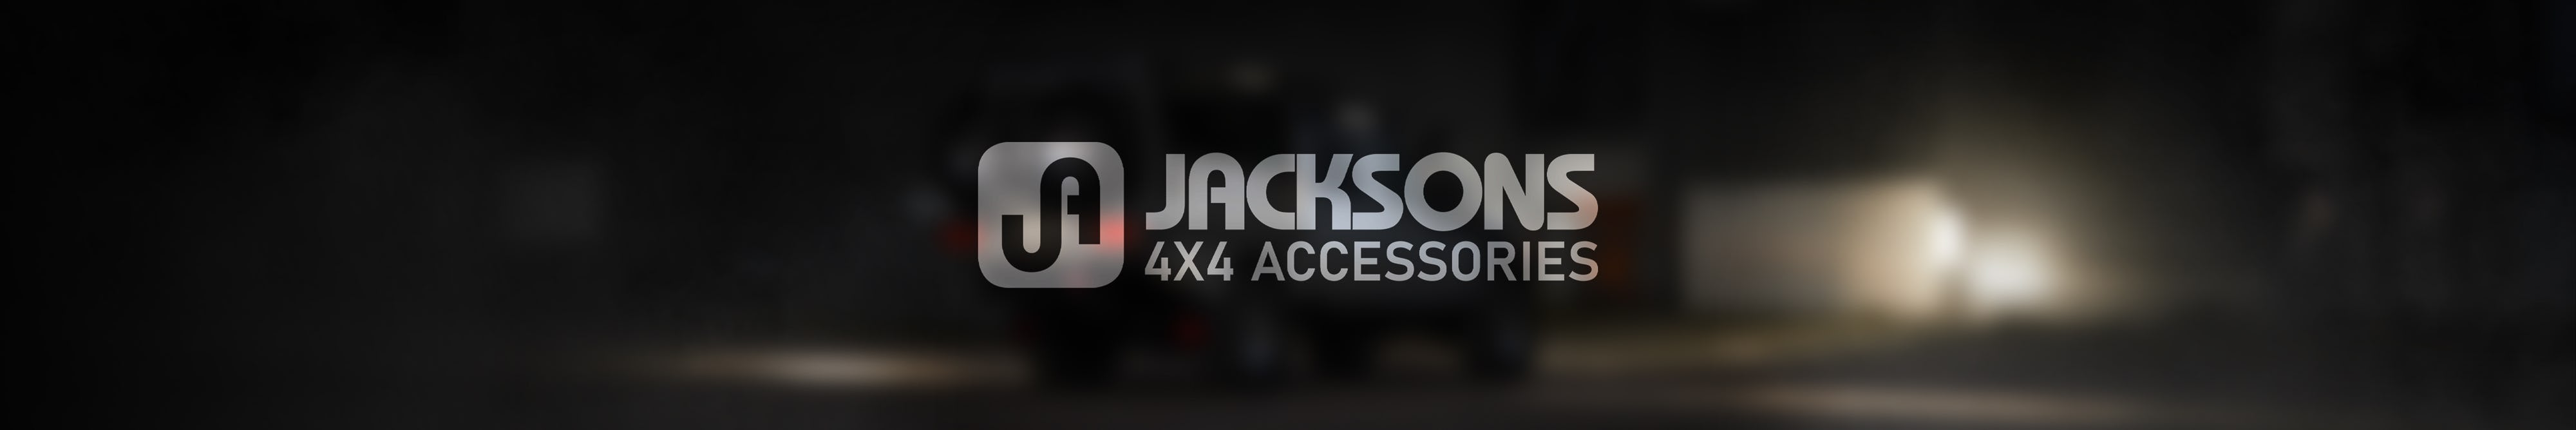 Jacksons 4x4 brands